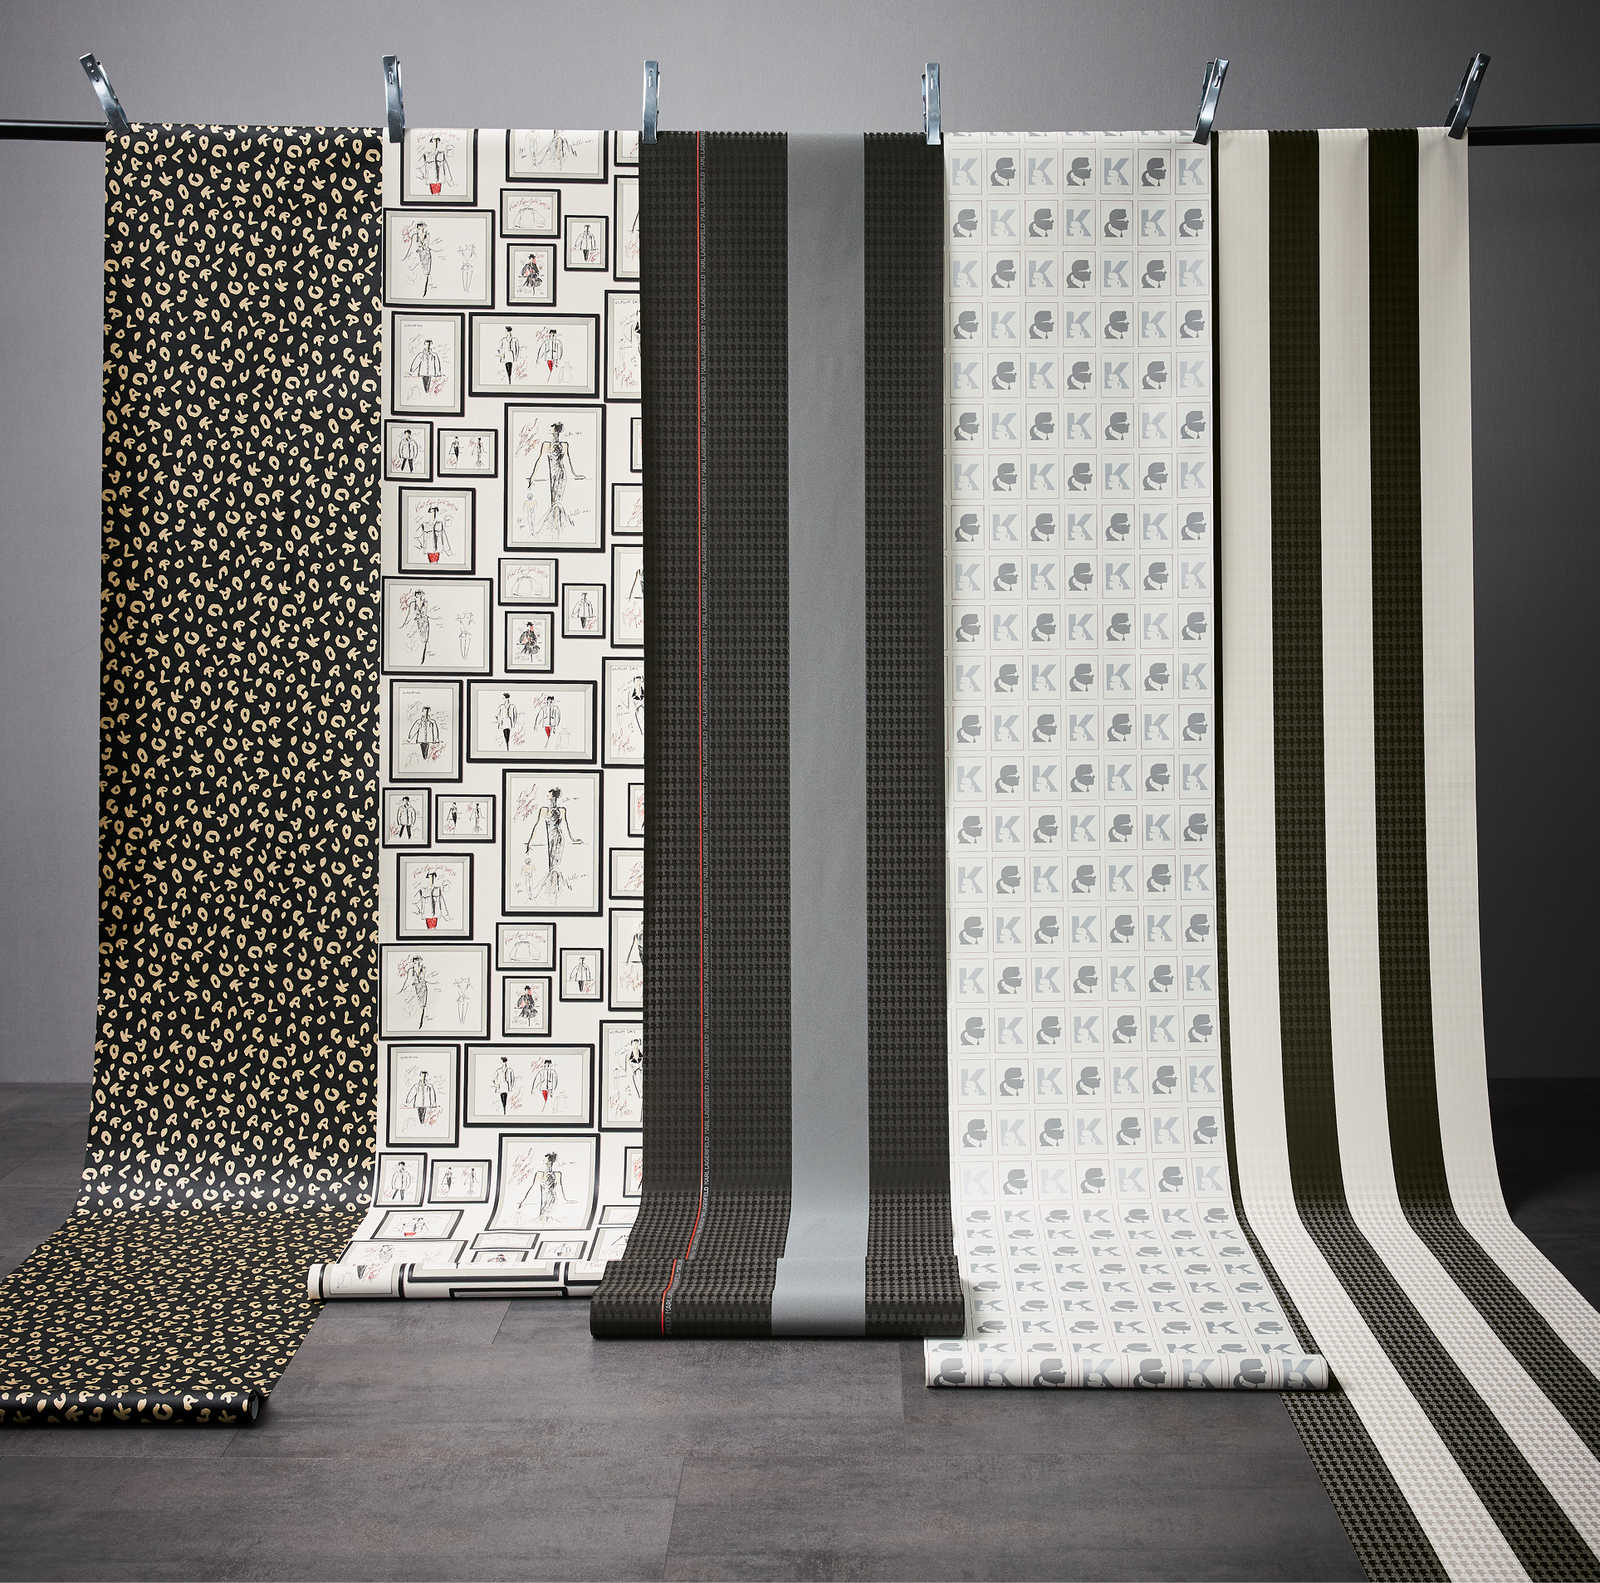             Wallpaper Karl LAGERFELD stripes & texture pattern - black, white
        